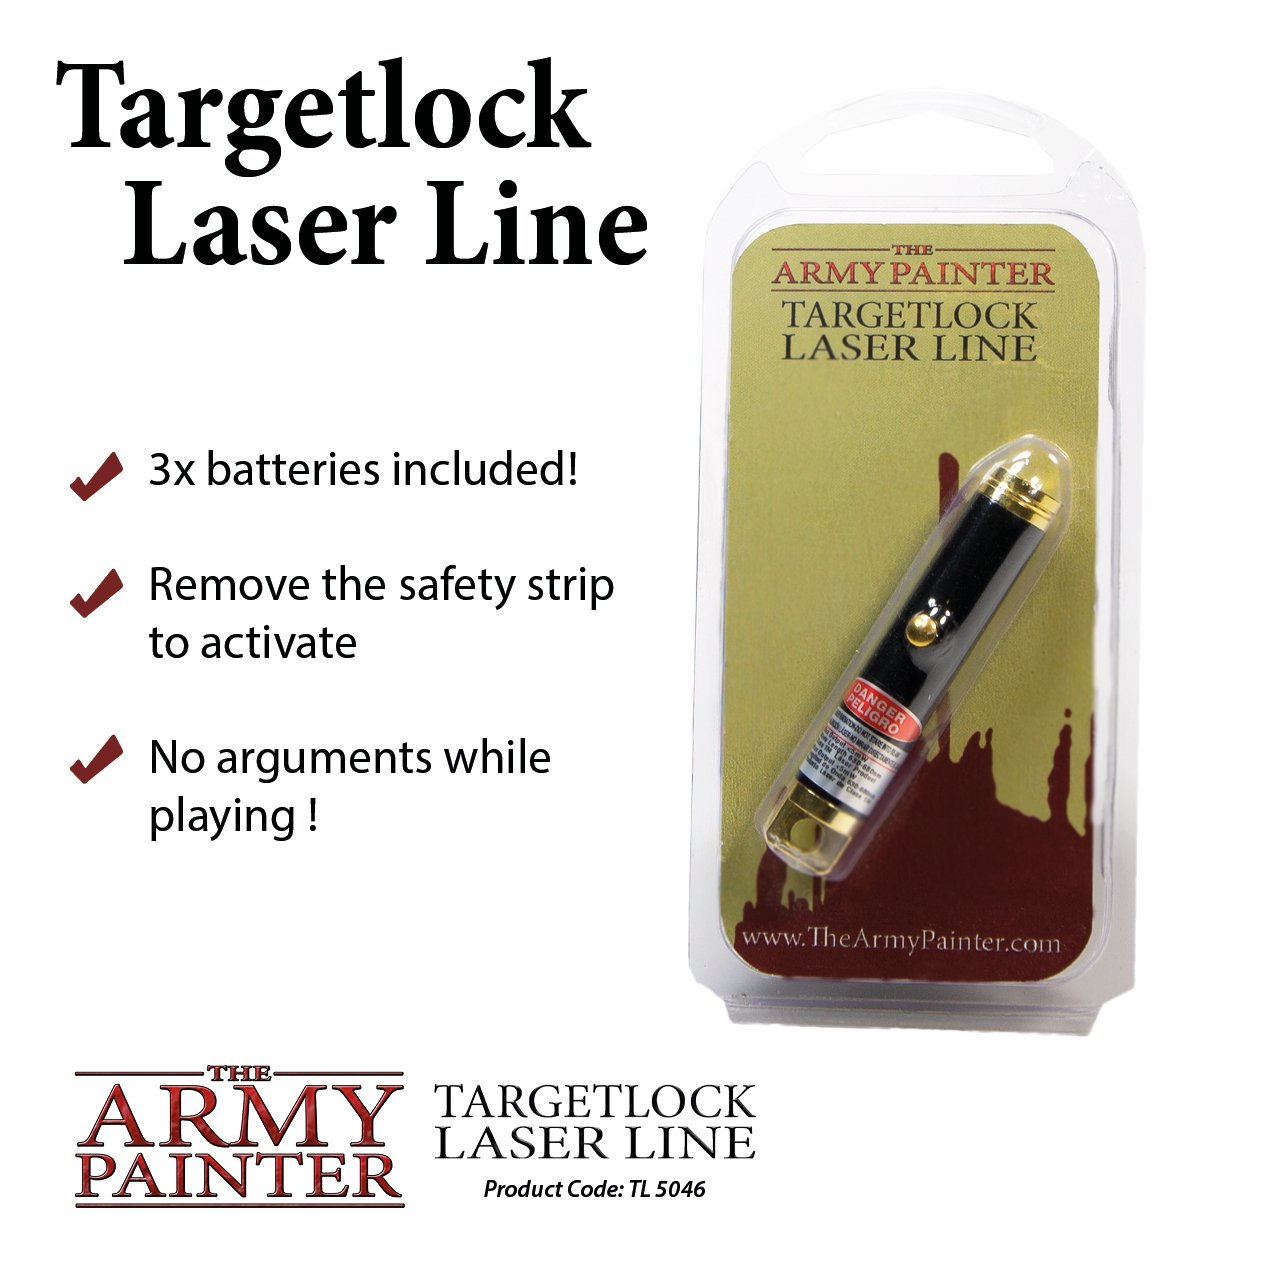 Targetlock Laser Line - Linebreakers